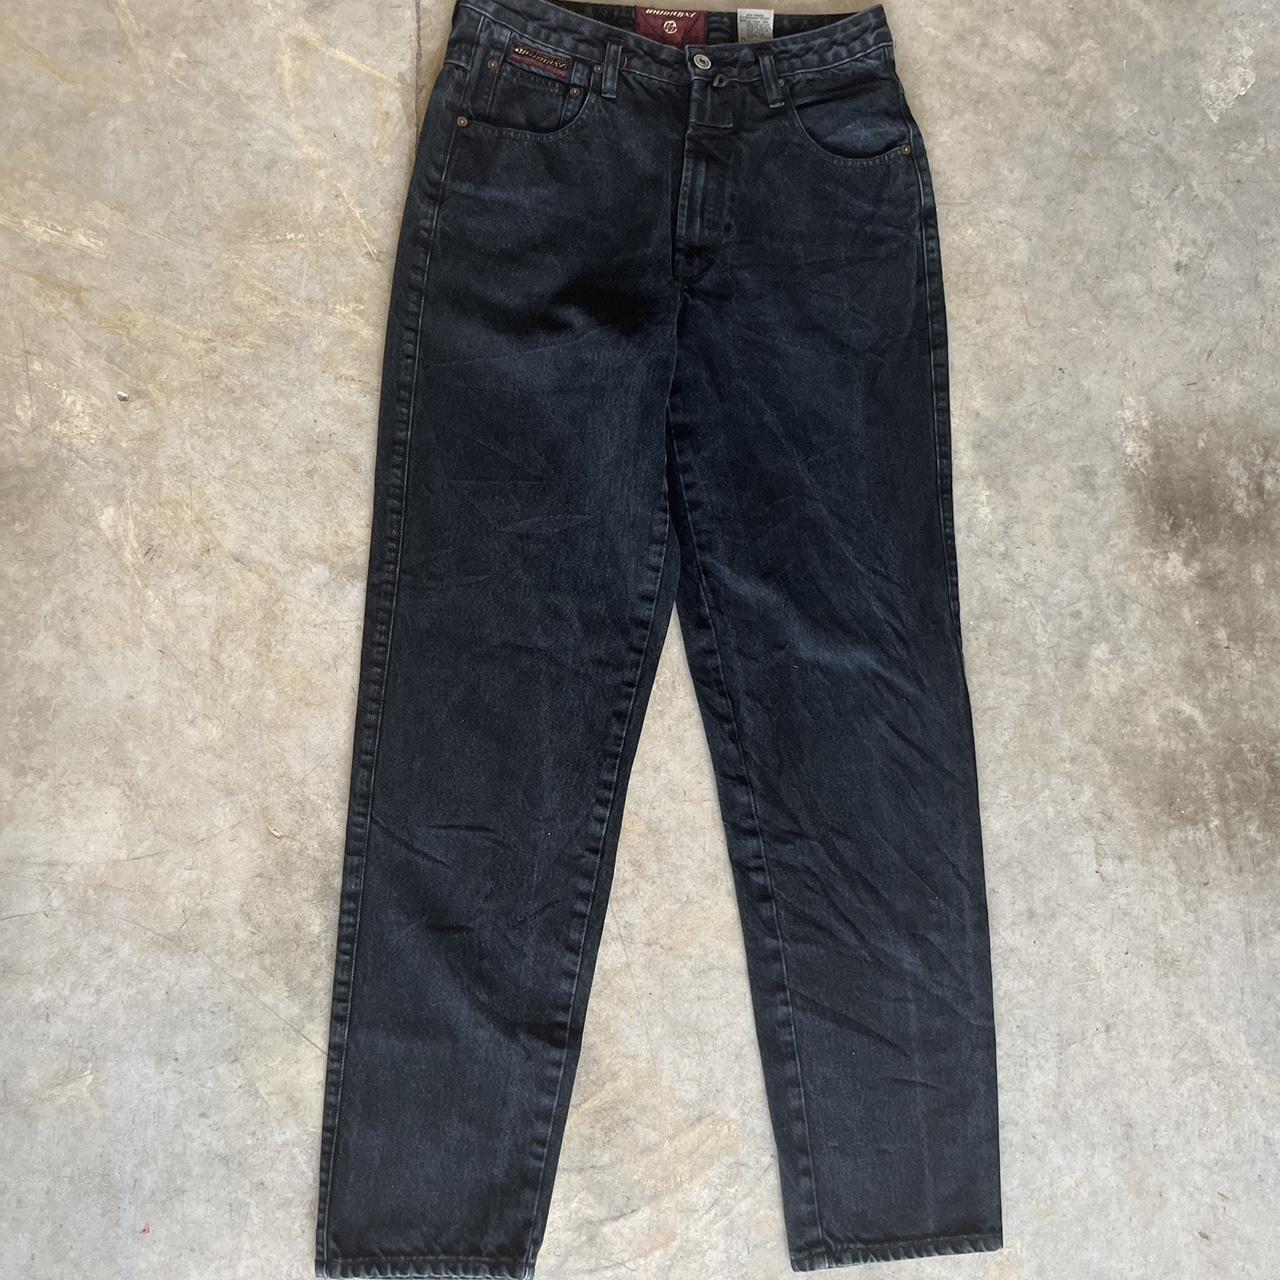 union bay jeans 32 X 30 - Depop